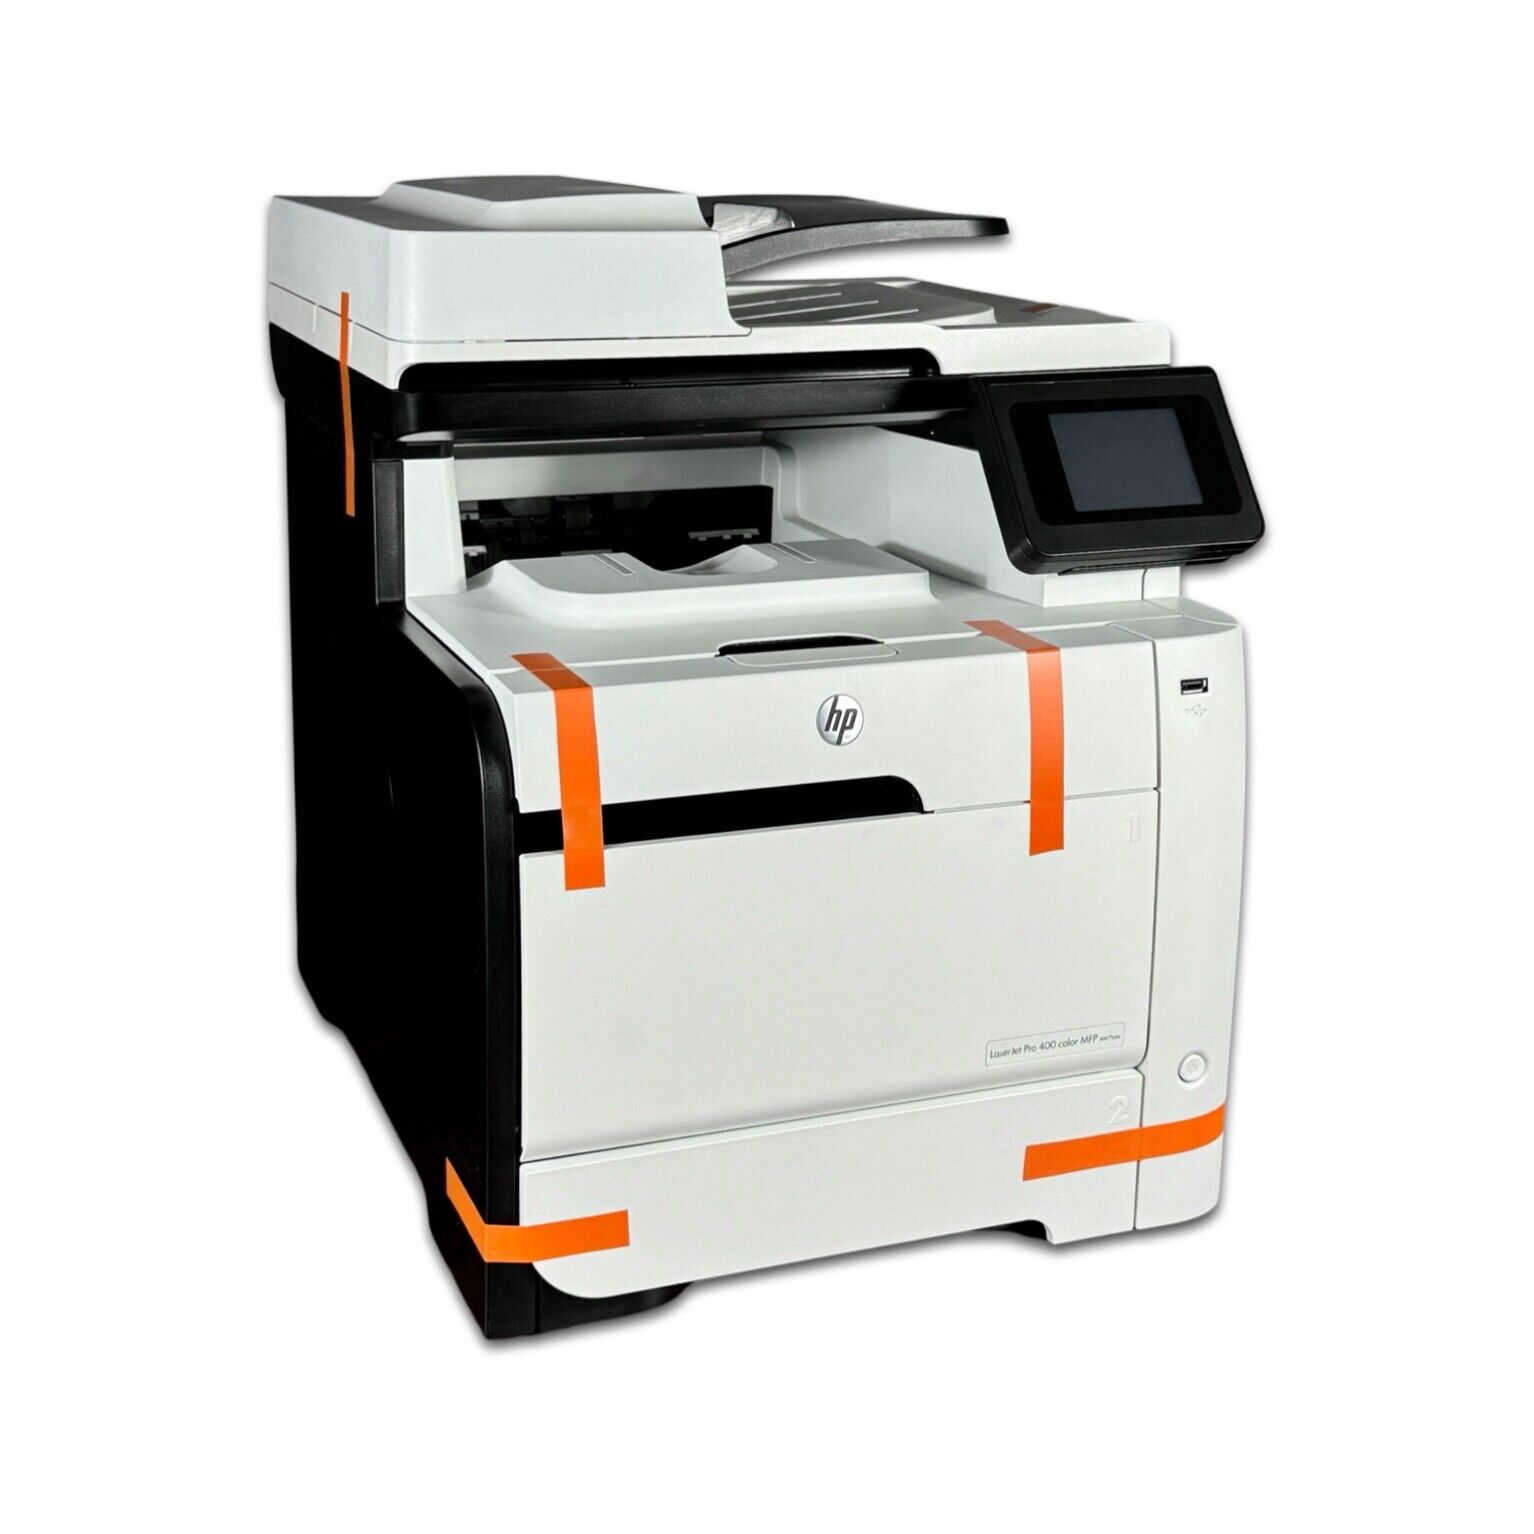 HP LaserJet Pro 400 color MFP M475dw Wireless All-In-One Printer CE864A